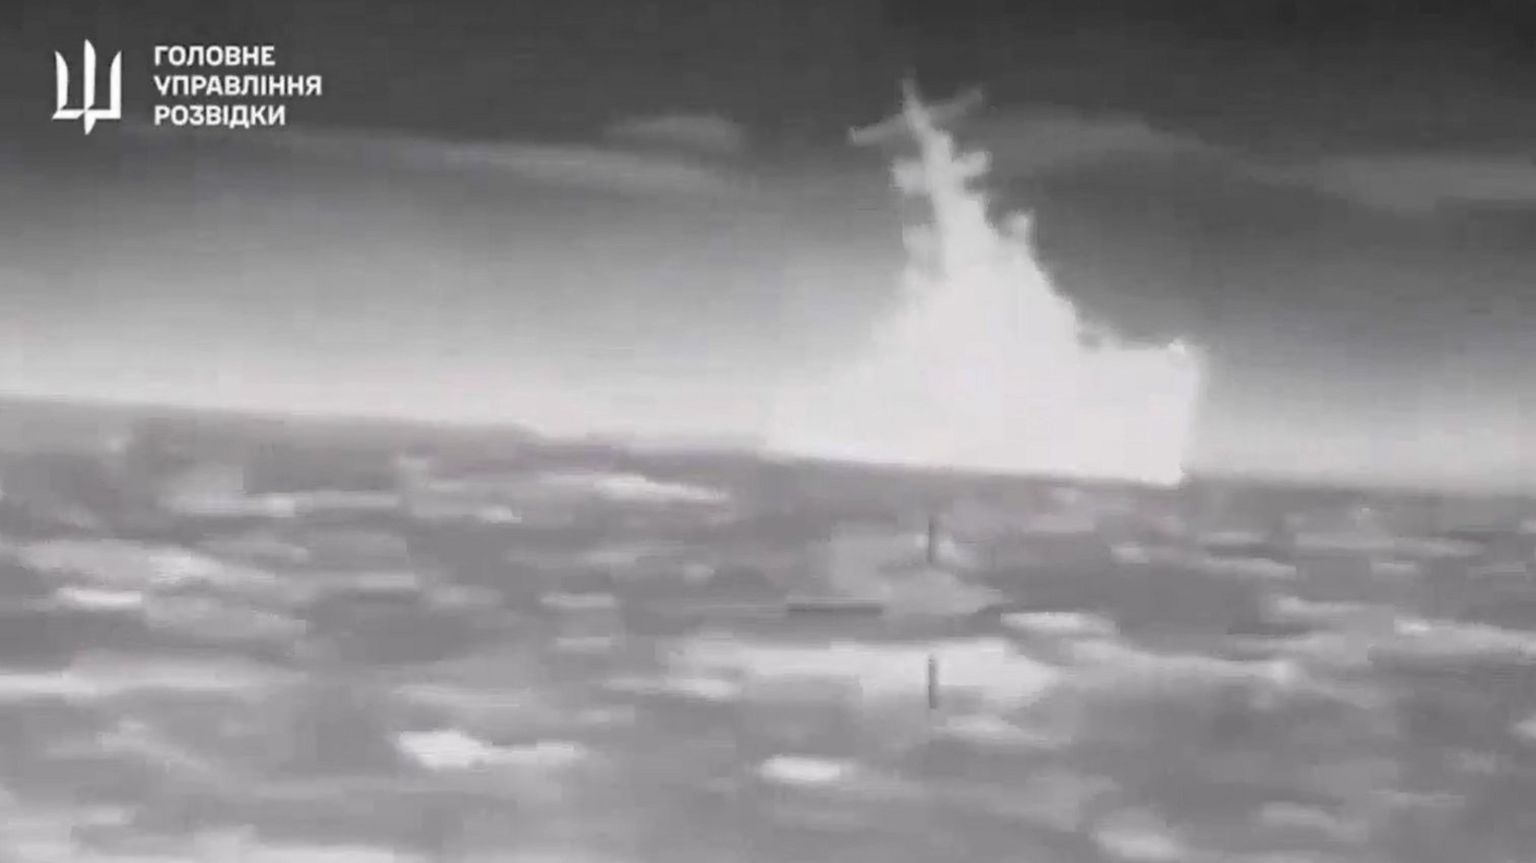 Video shows stricken missile boat